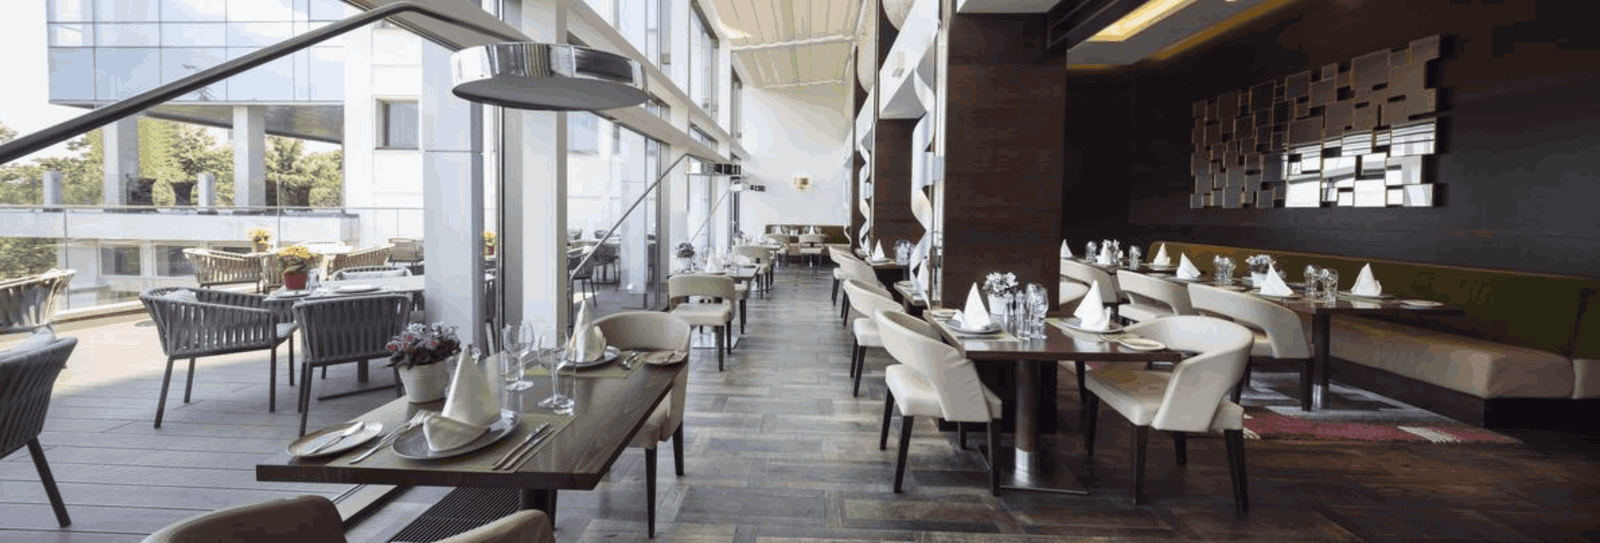 #1 Restaurant Cleaning Services Dubai